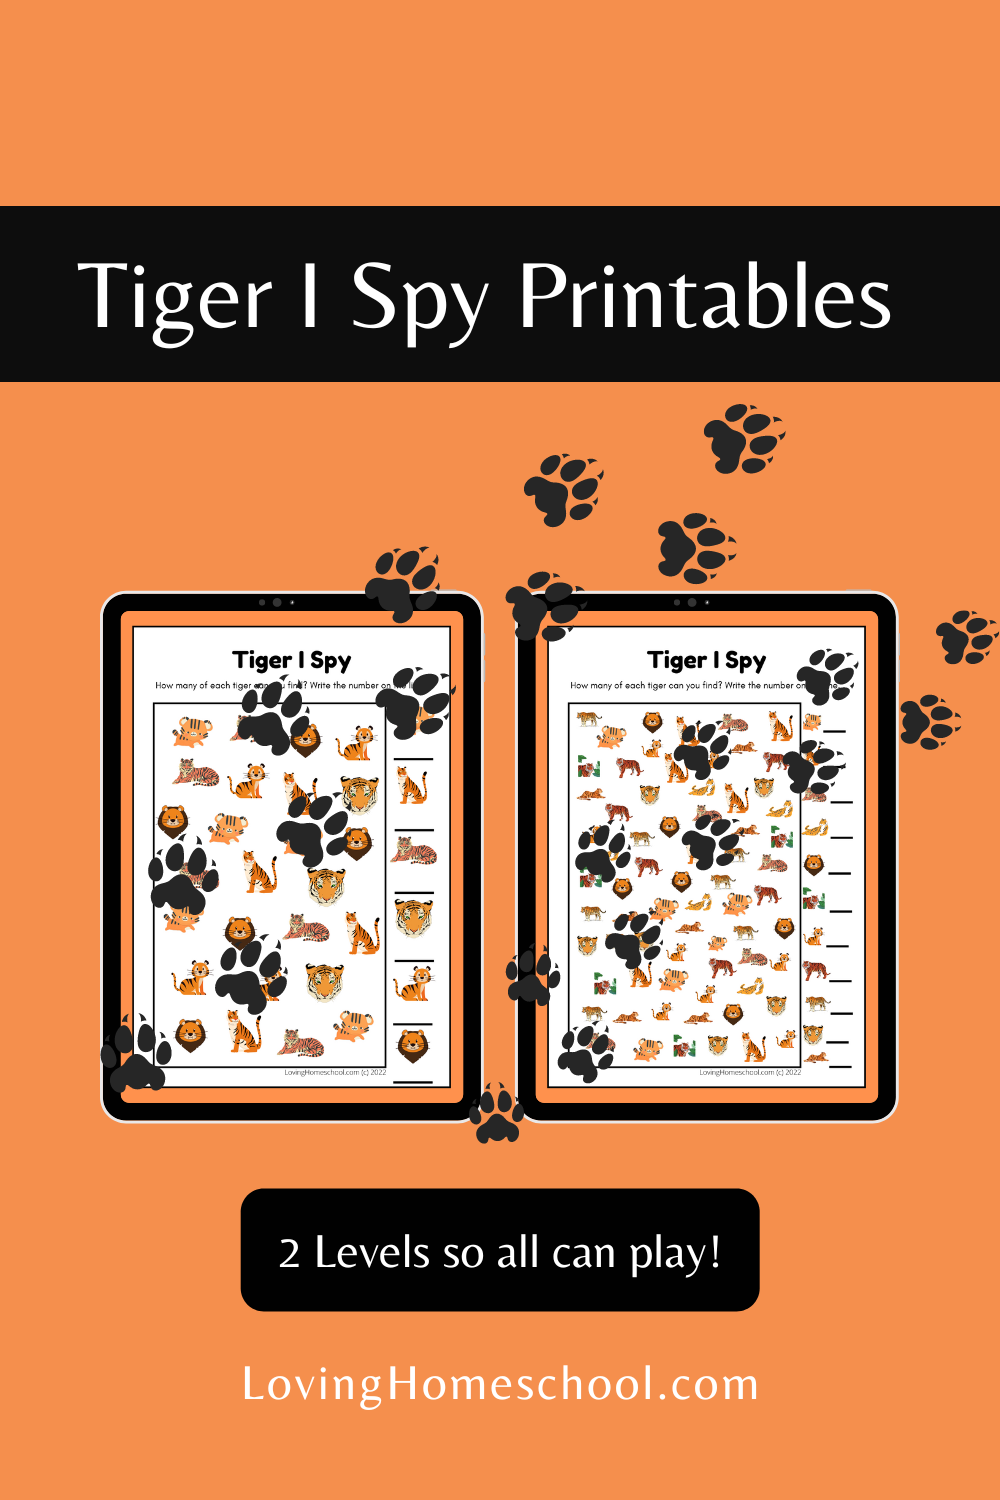 Tiger I Spy Printables Pinterest Pin